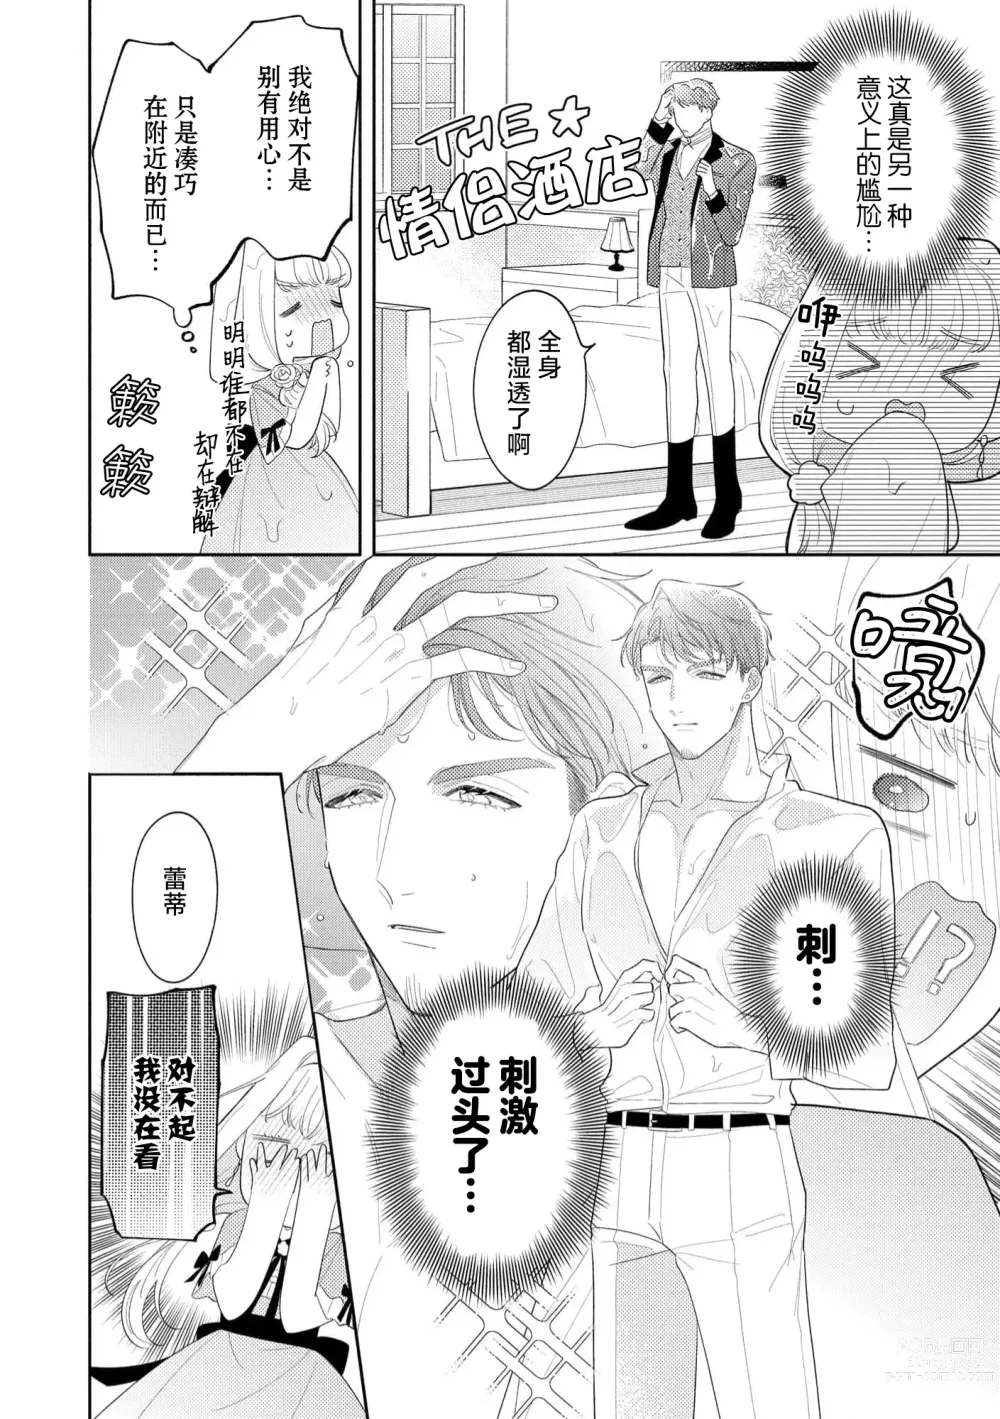 Page 101 of manga 拜启 王弟殿下、 本该是限定一夜但婚约的申请却是意料之外！1-3